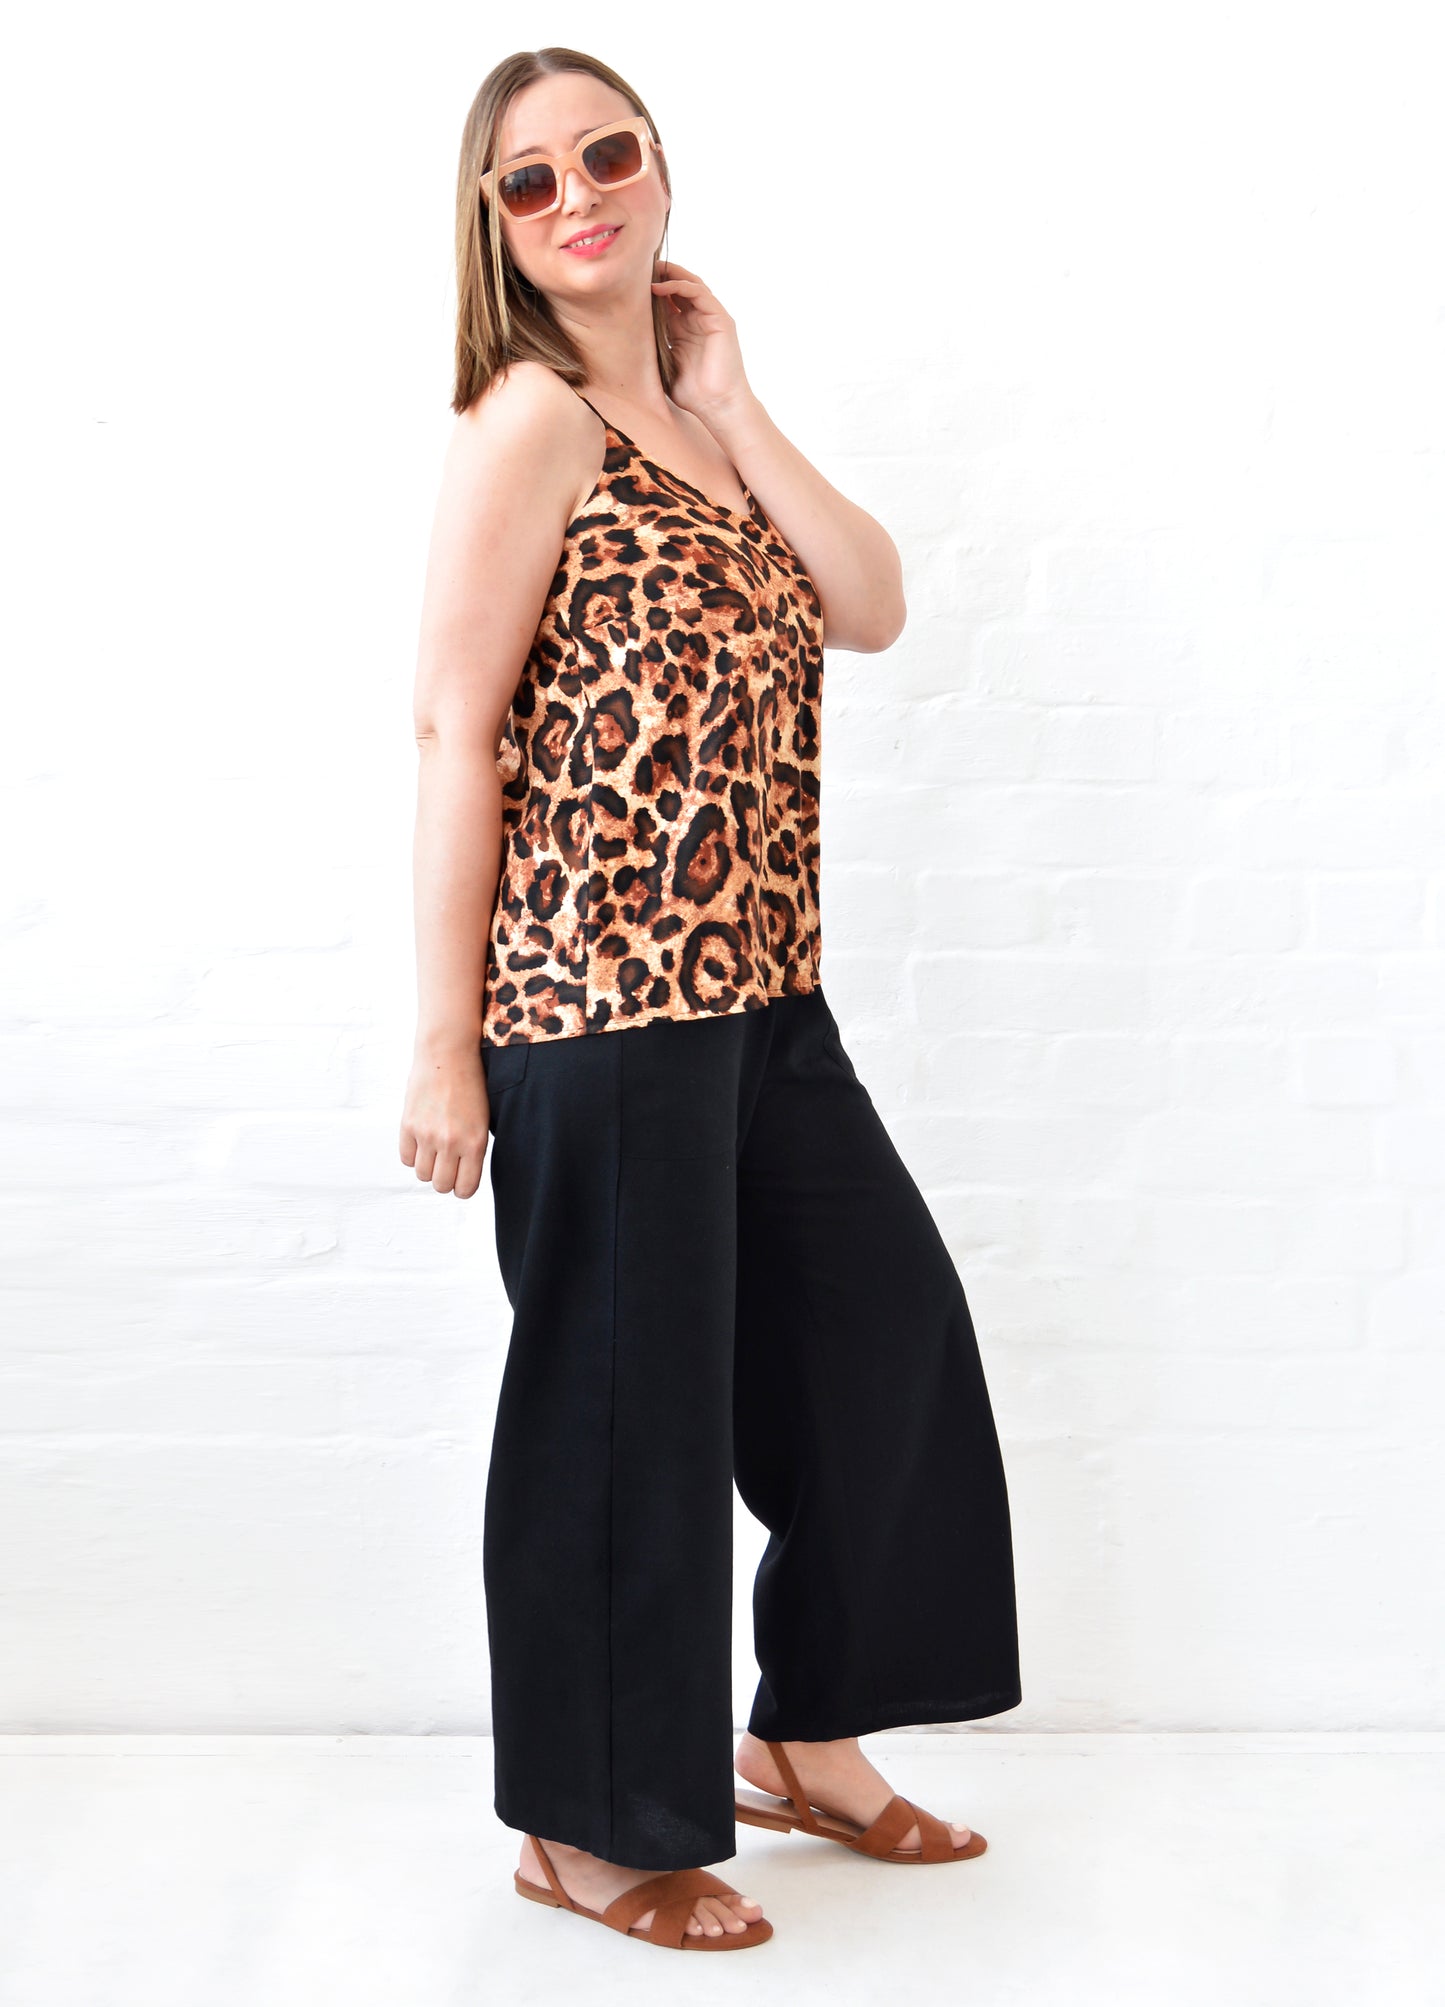 Blair camisole in coco Classic Leopard print